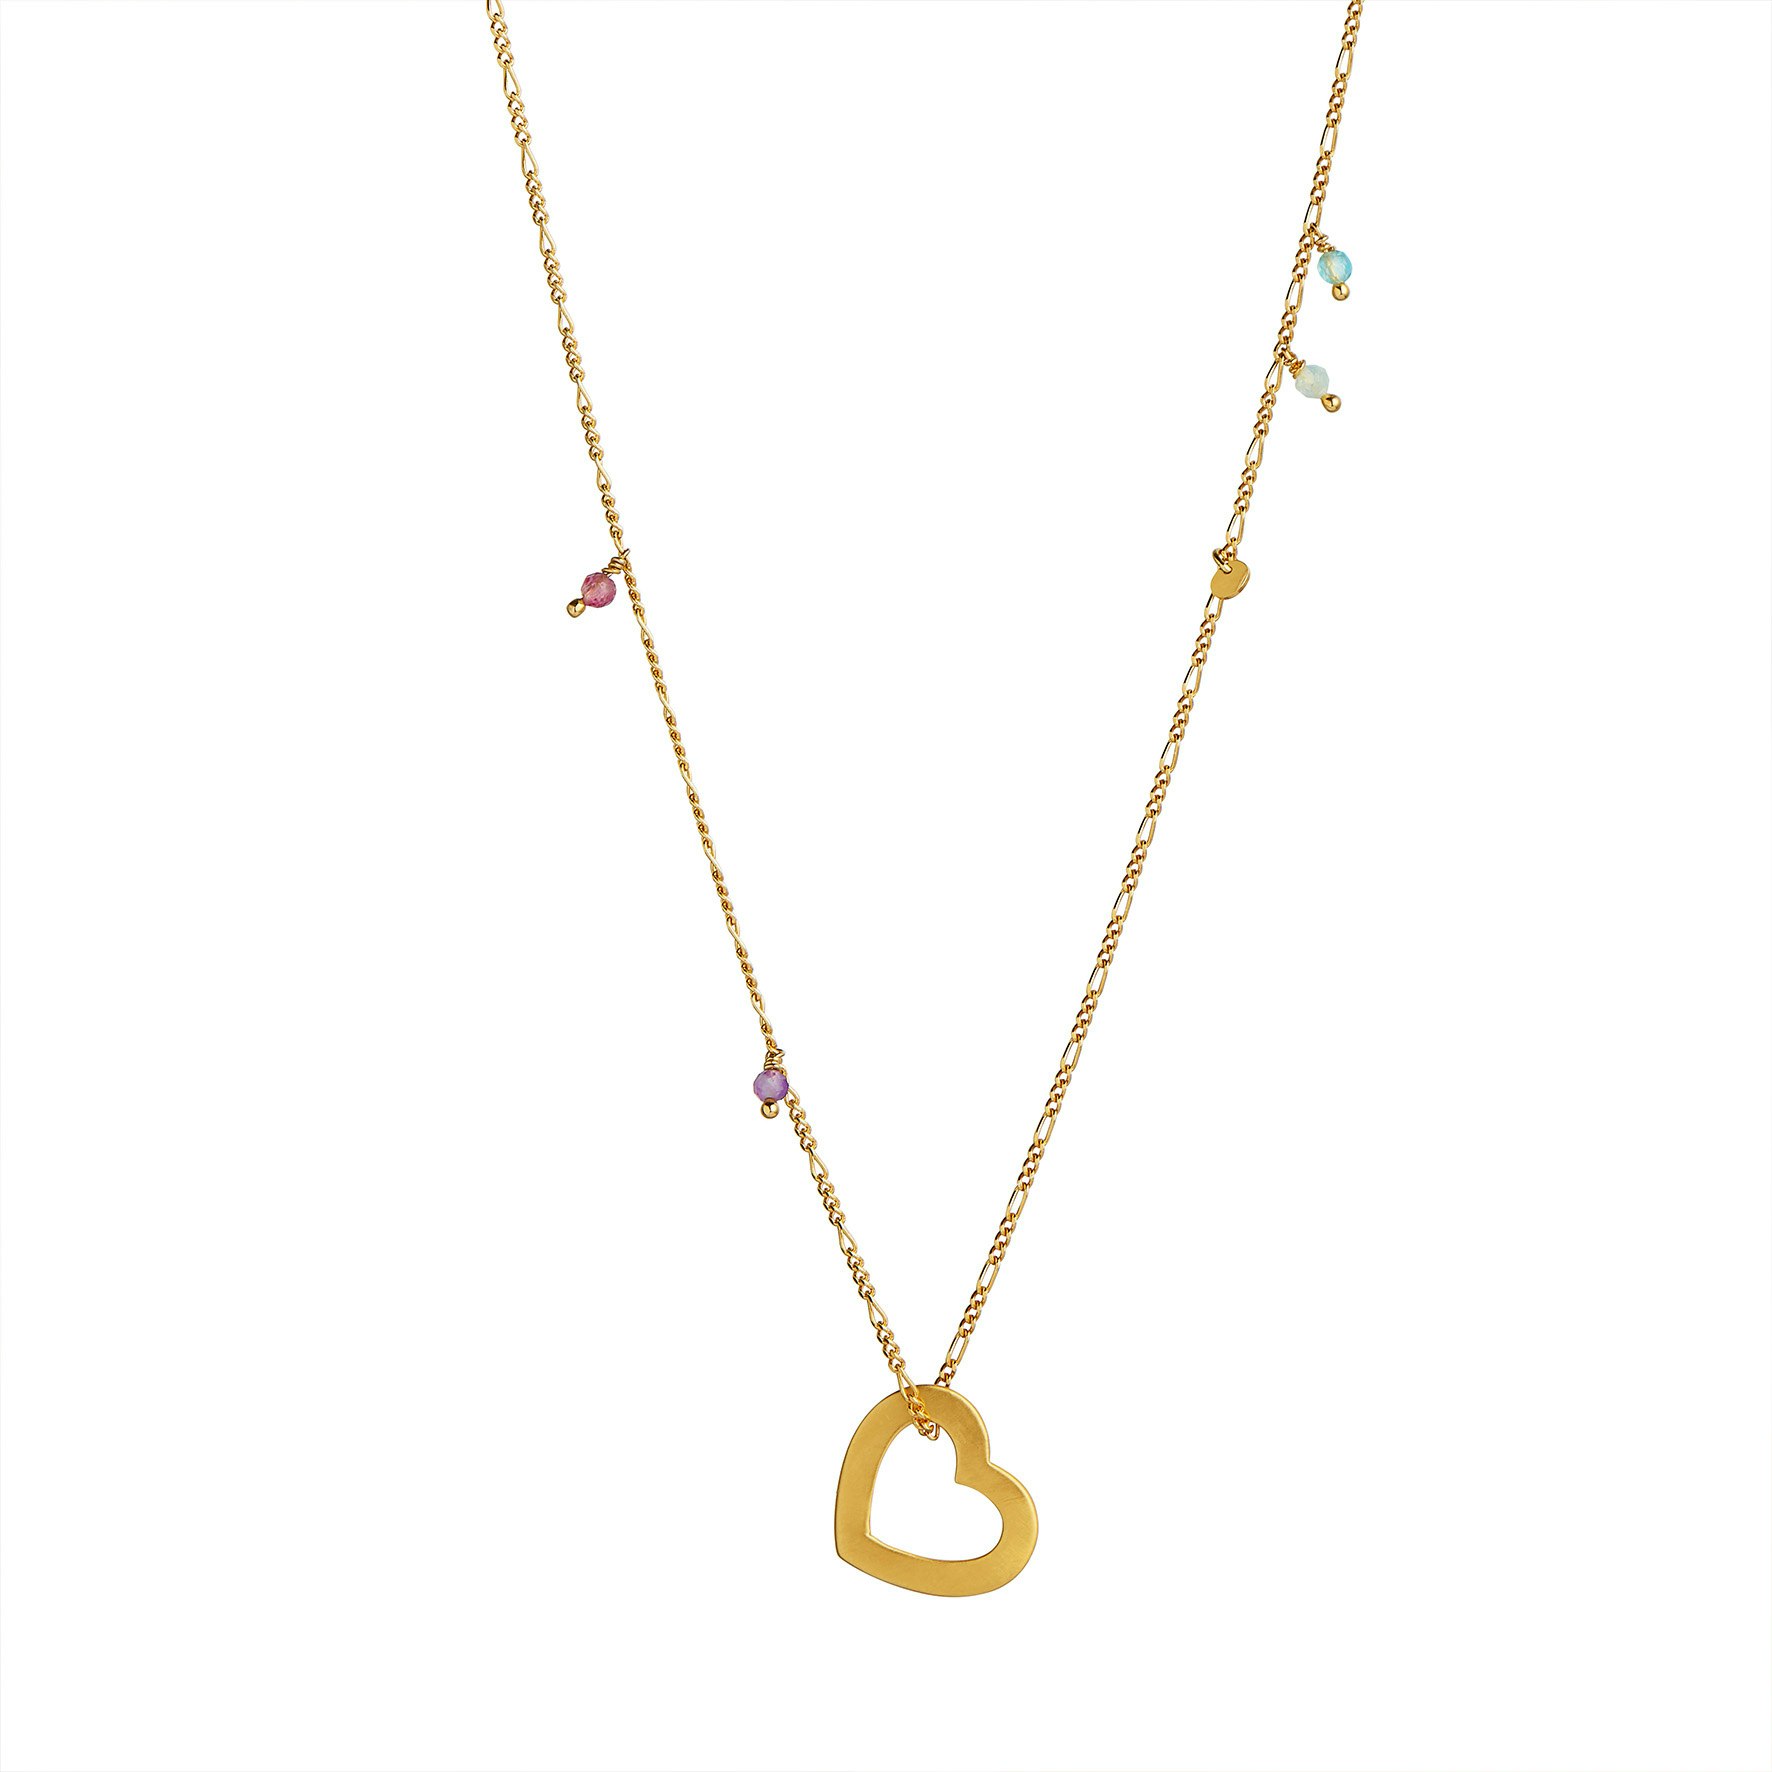 Open Love Heart Pendant van STINE A Jewelry in Verguld-Zilver Sterling 925